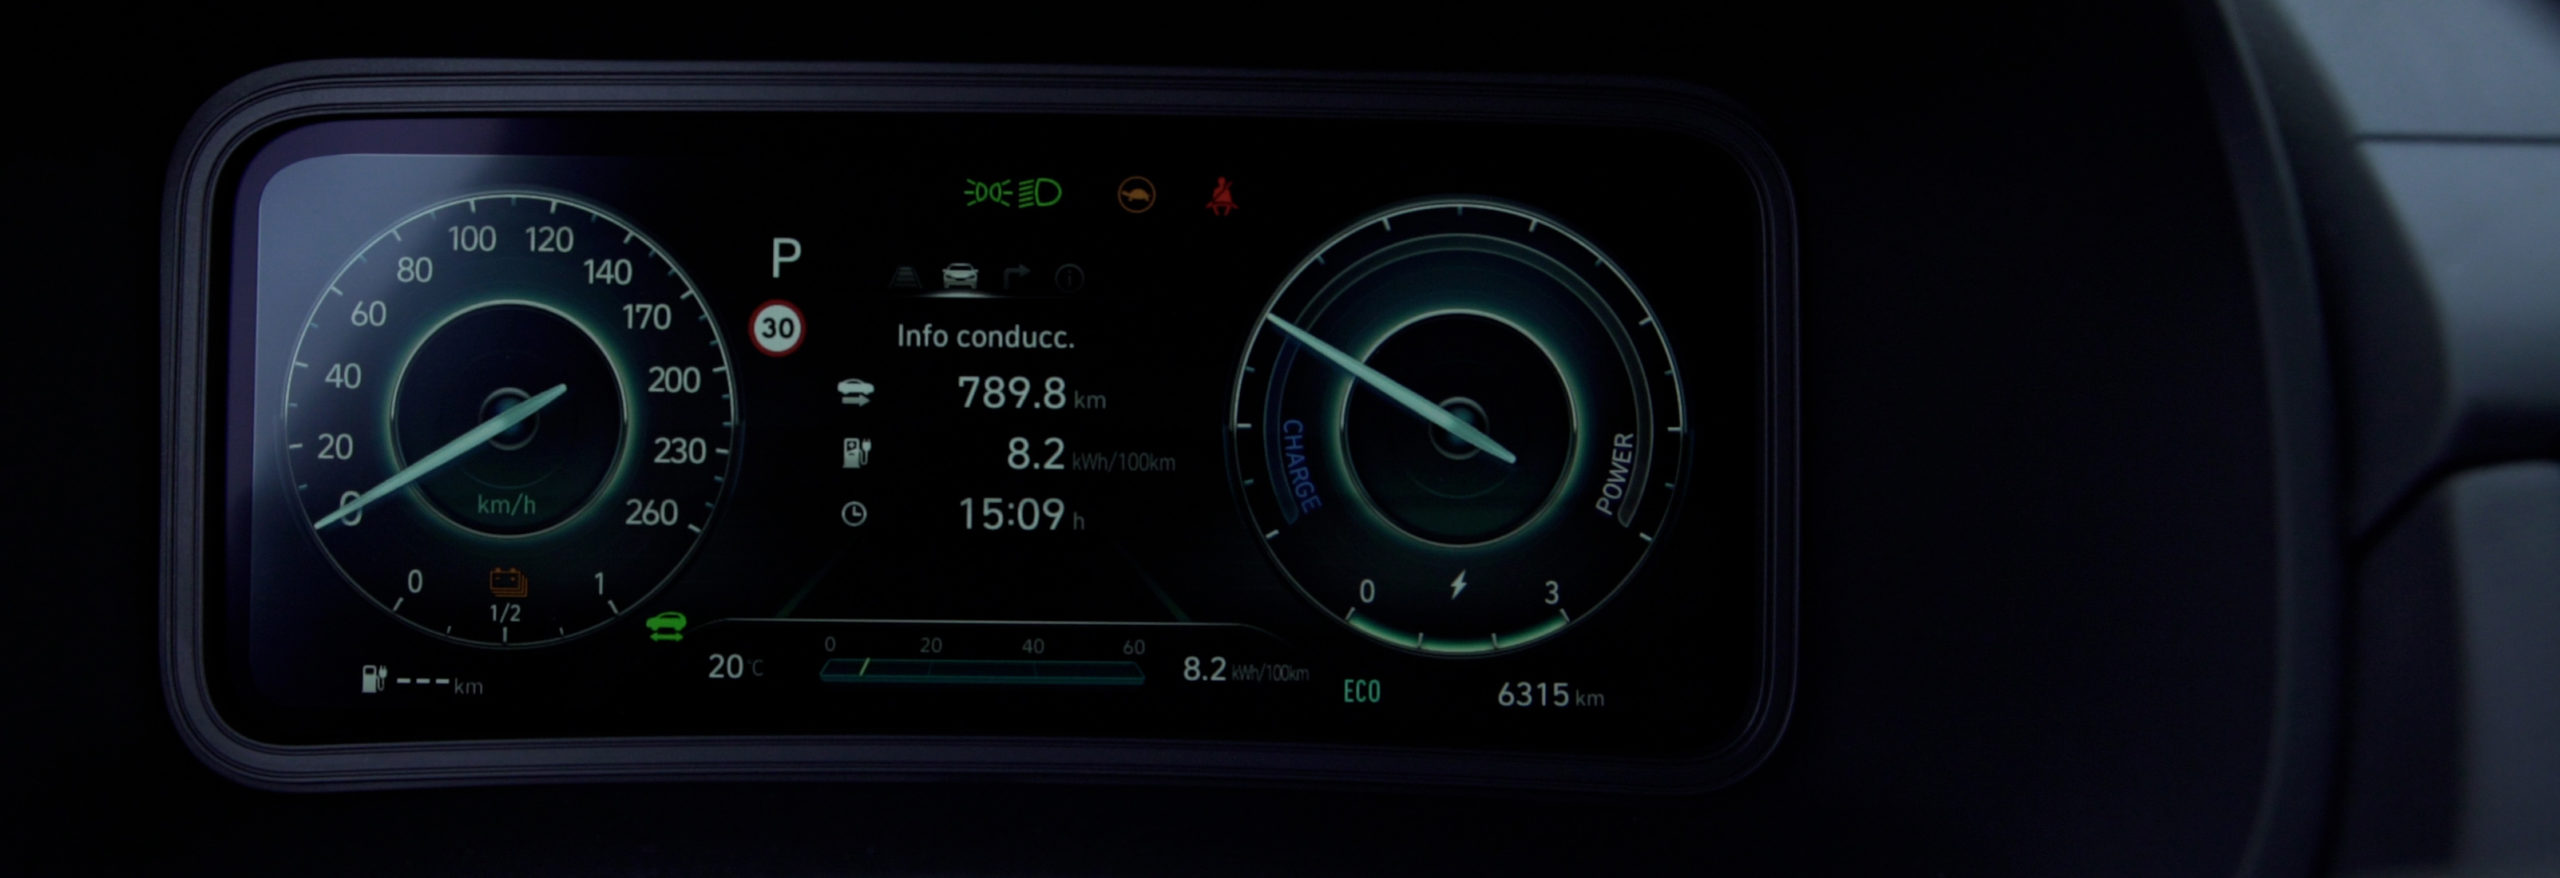 Hyundai Kona eléctrico récord de autonomía en ciclo urbano